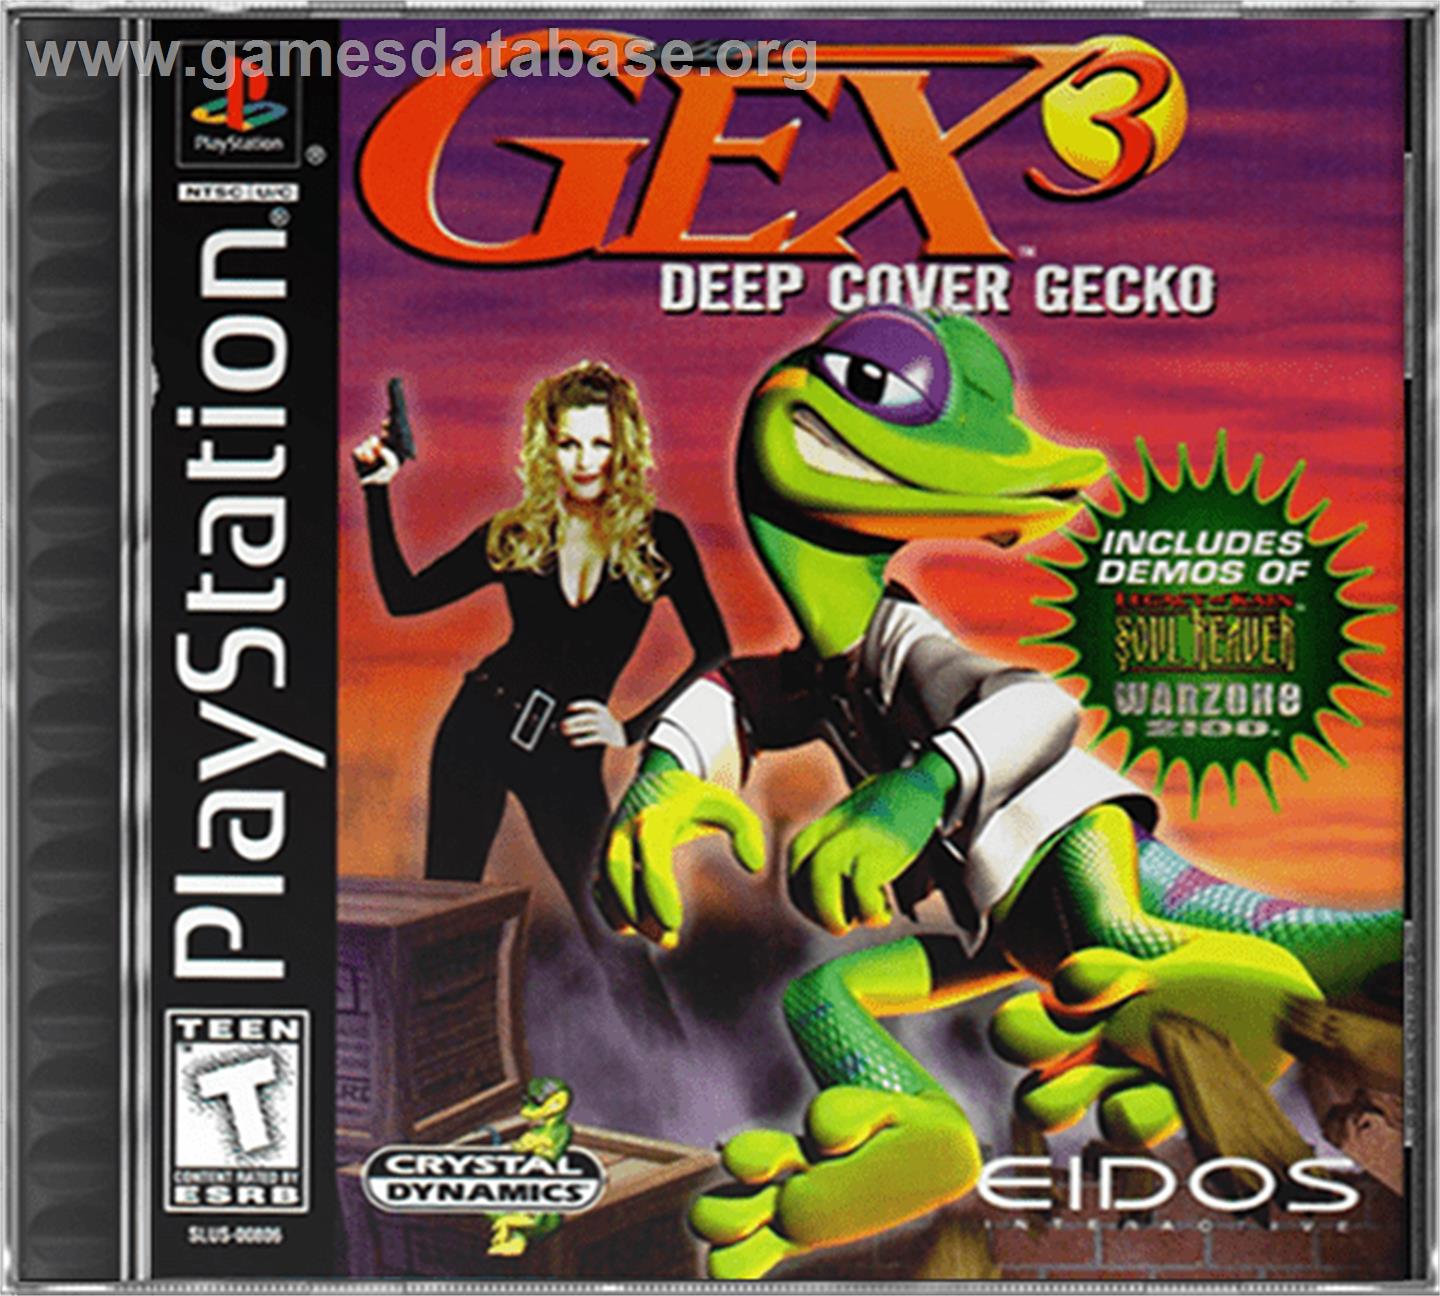 Gex 3: Deep Cover Gecko - Sony Playstation - Artwork - Box